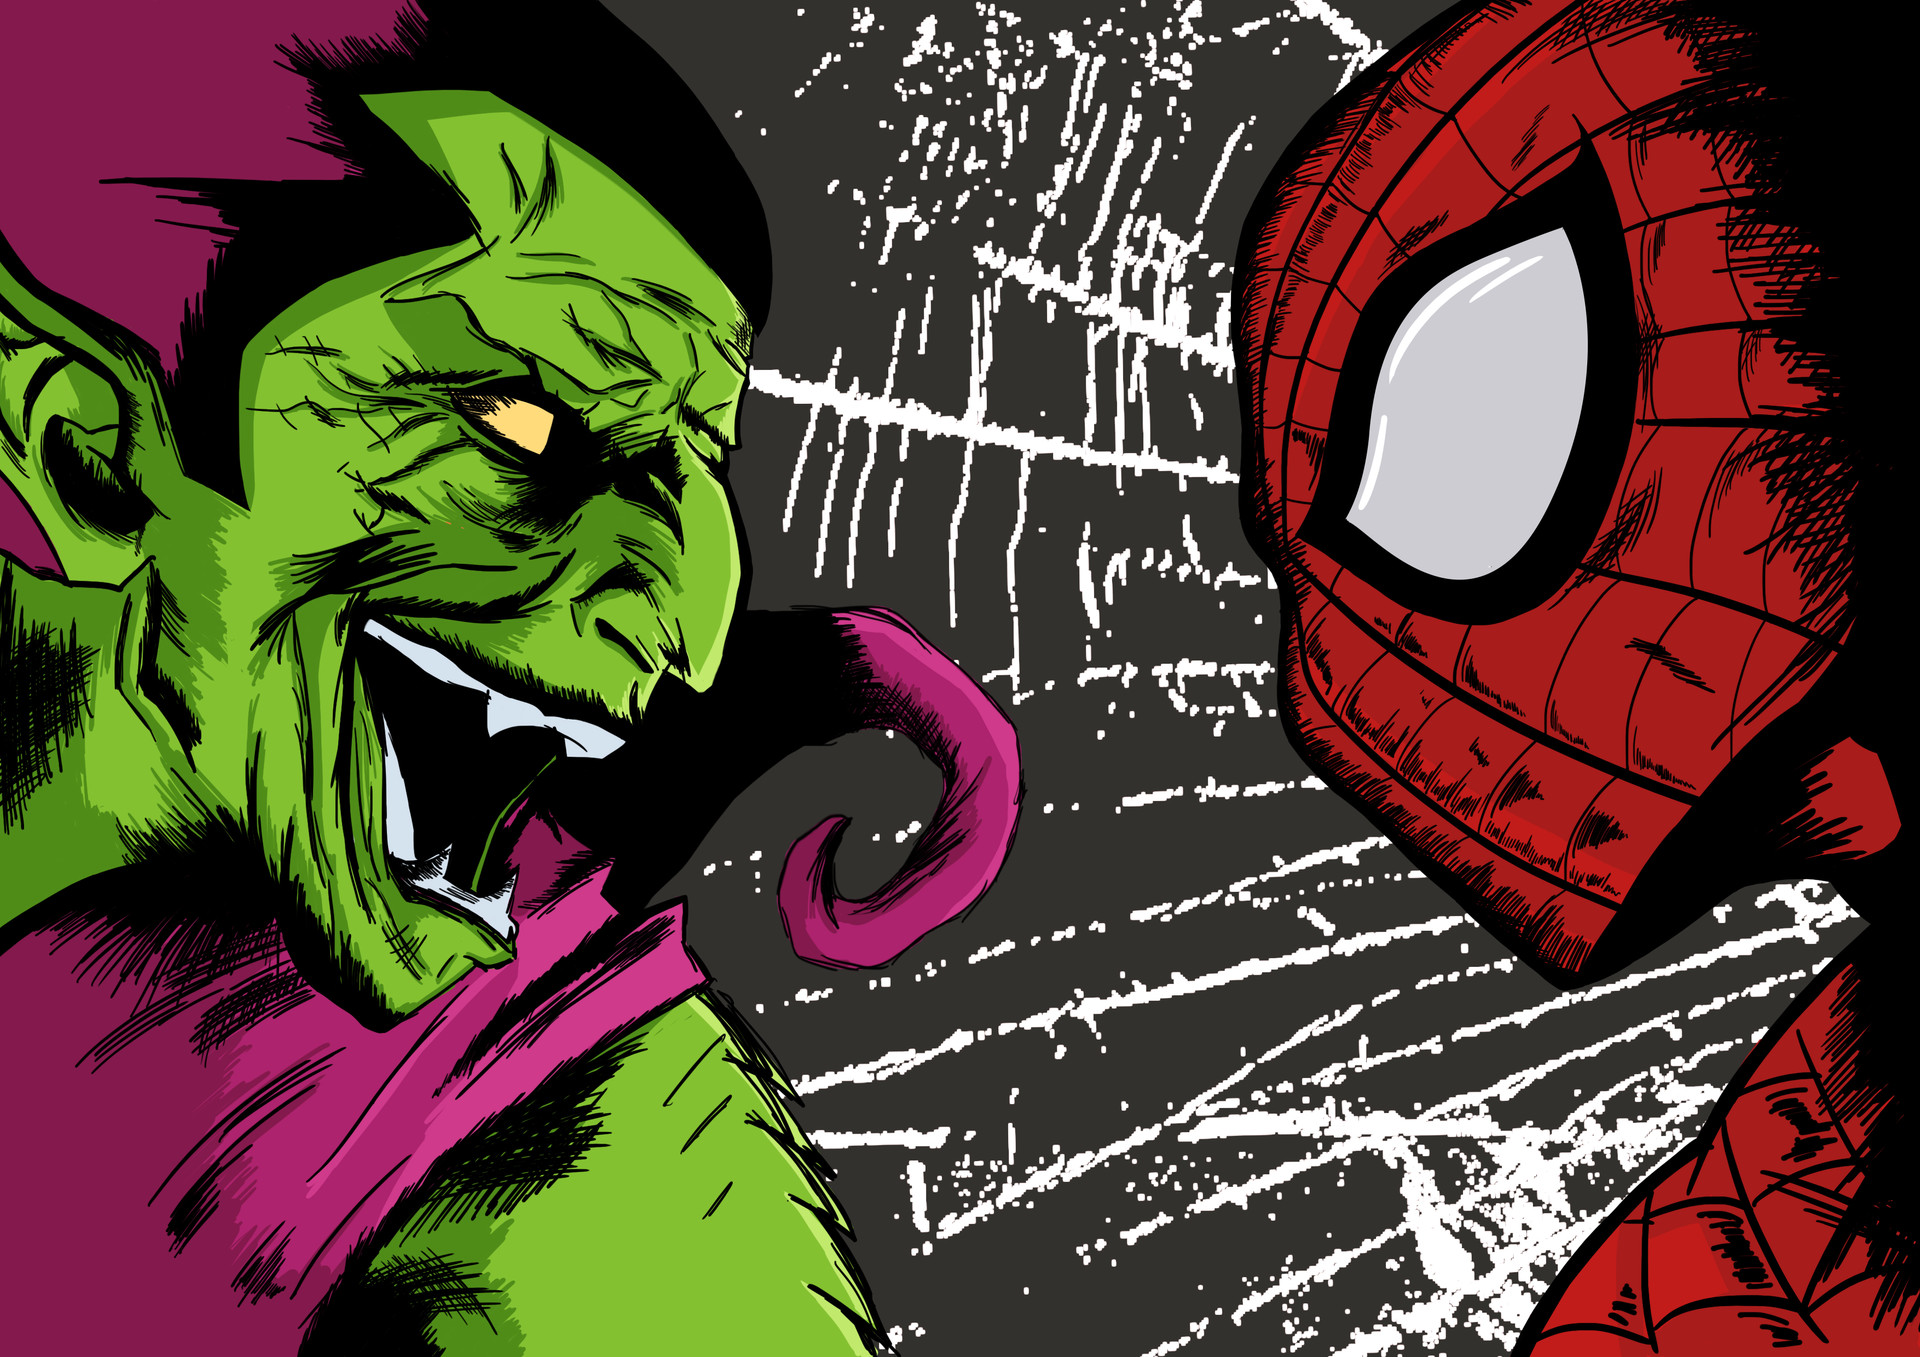 ArtStation - Spiderman vs Duende verde